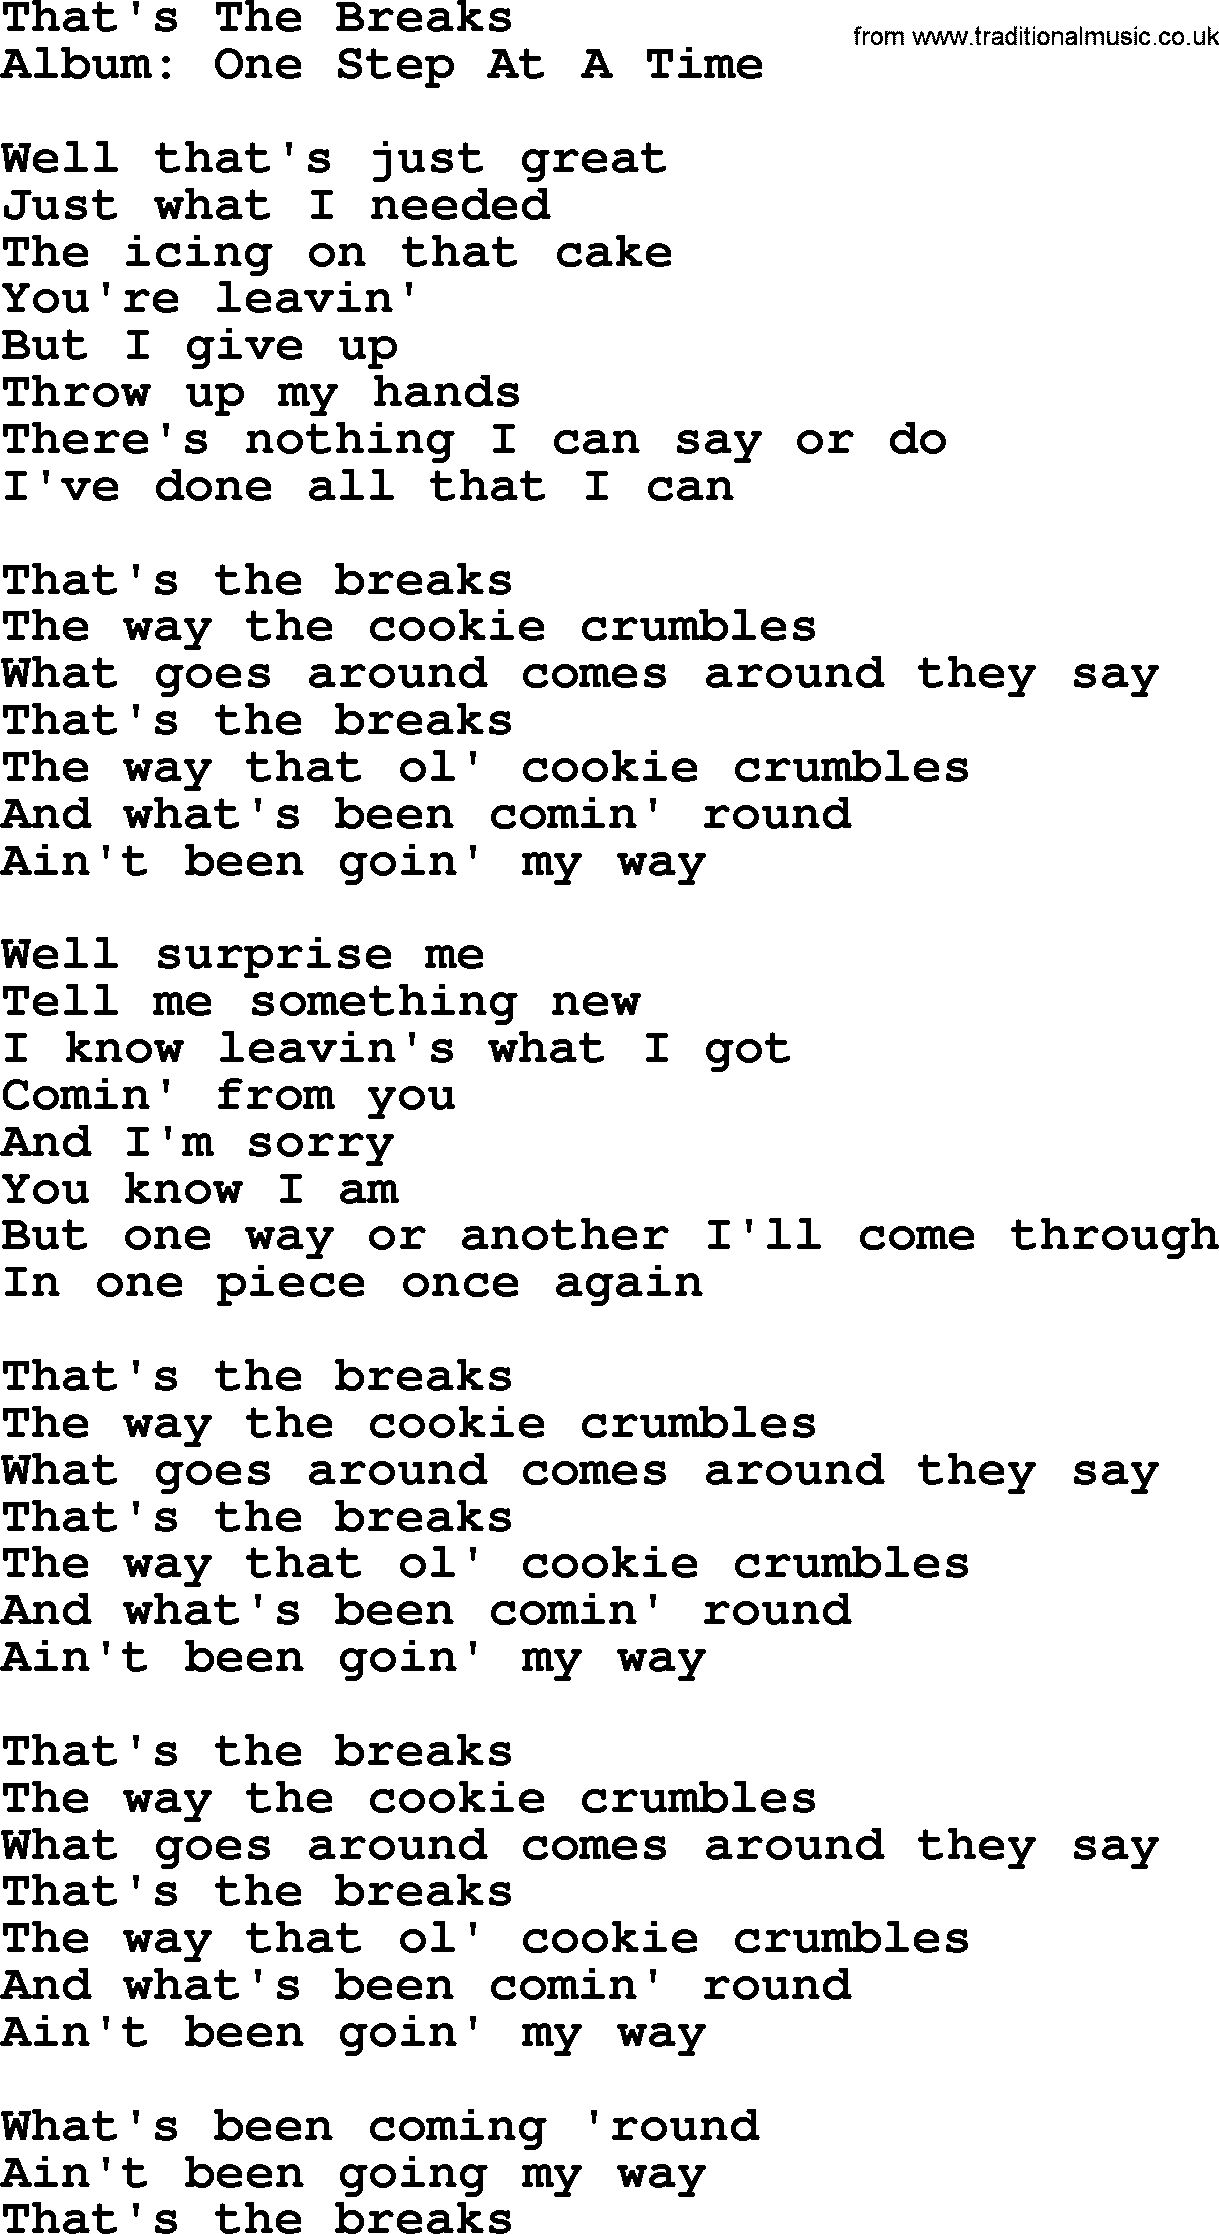 George Strait song: That's The Breaks, lyrics